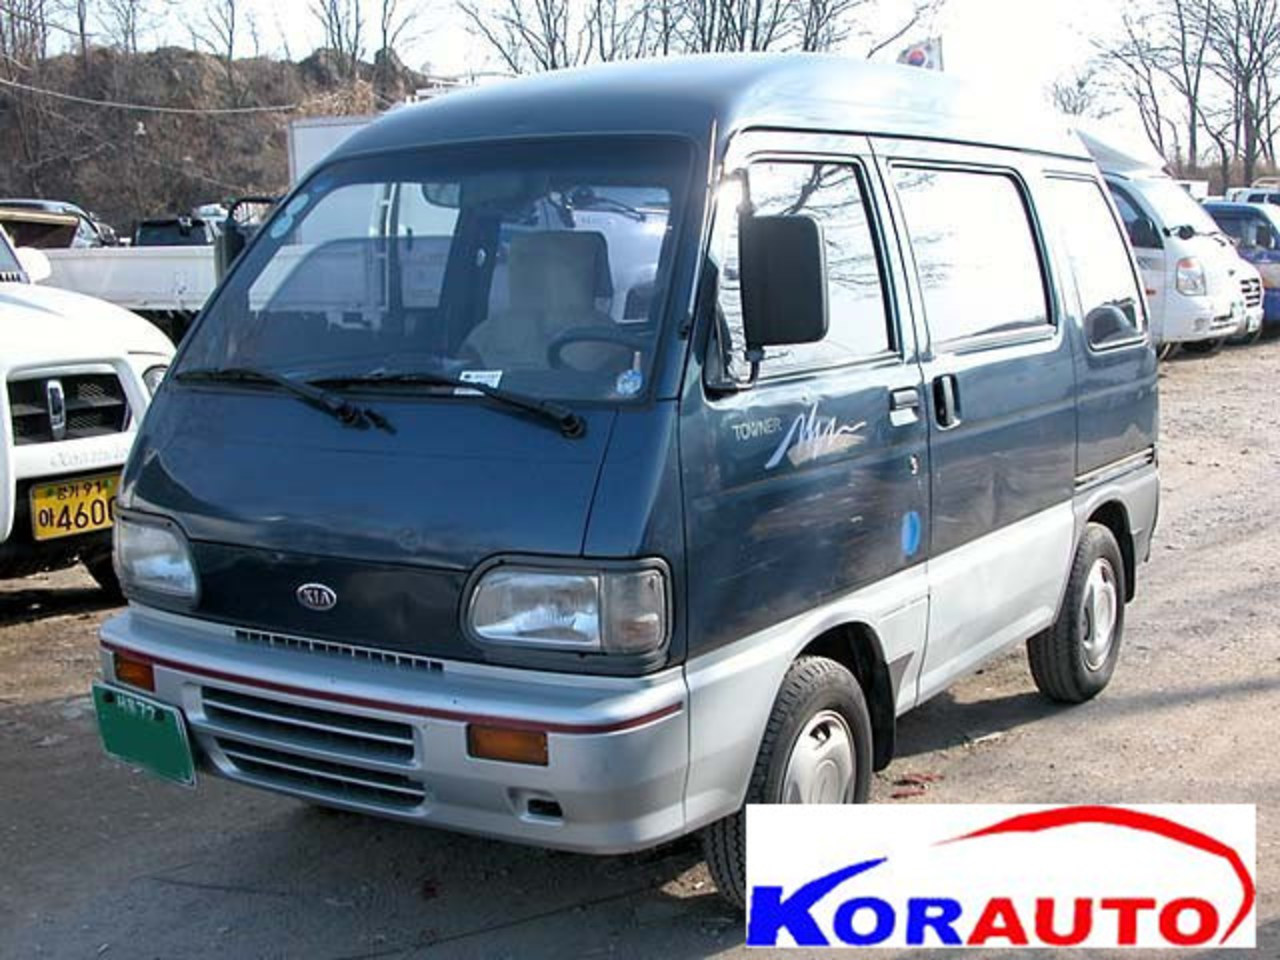 Korea used car center - korauto trading Co., Ltd.